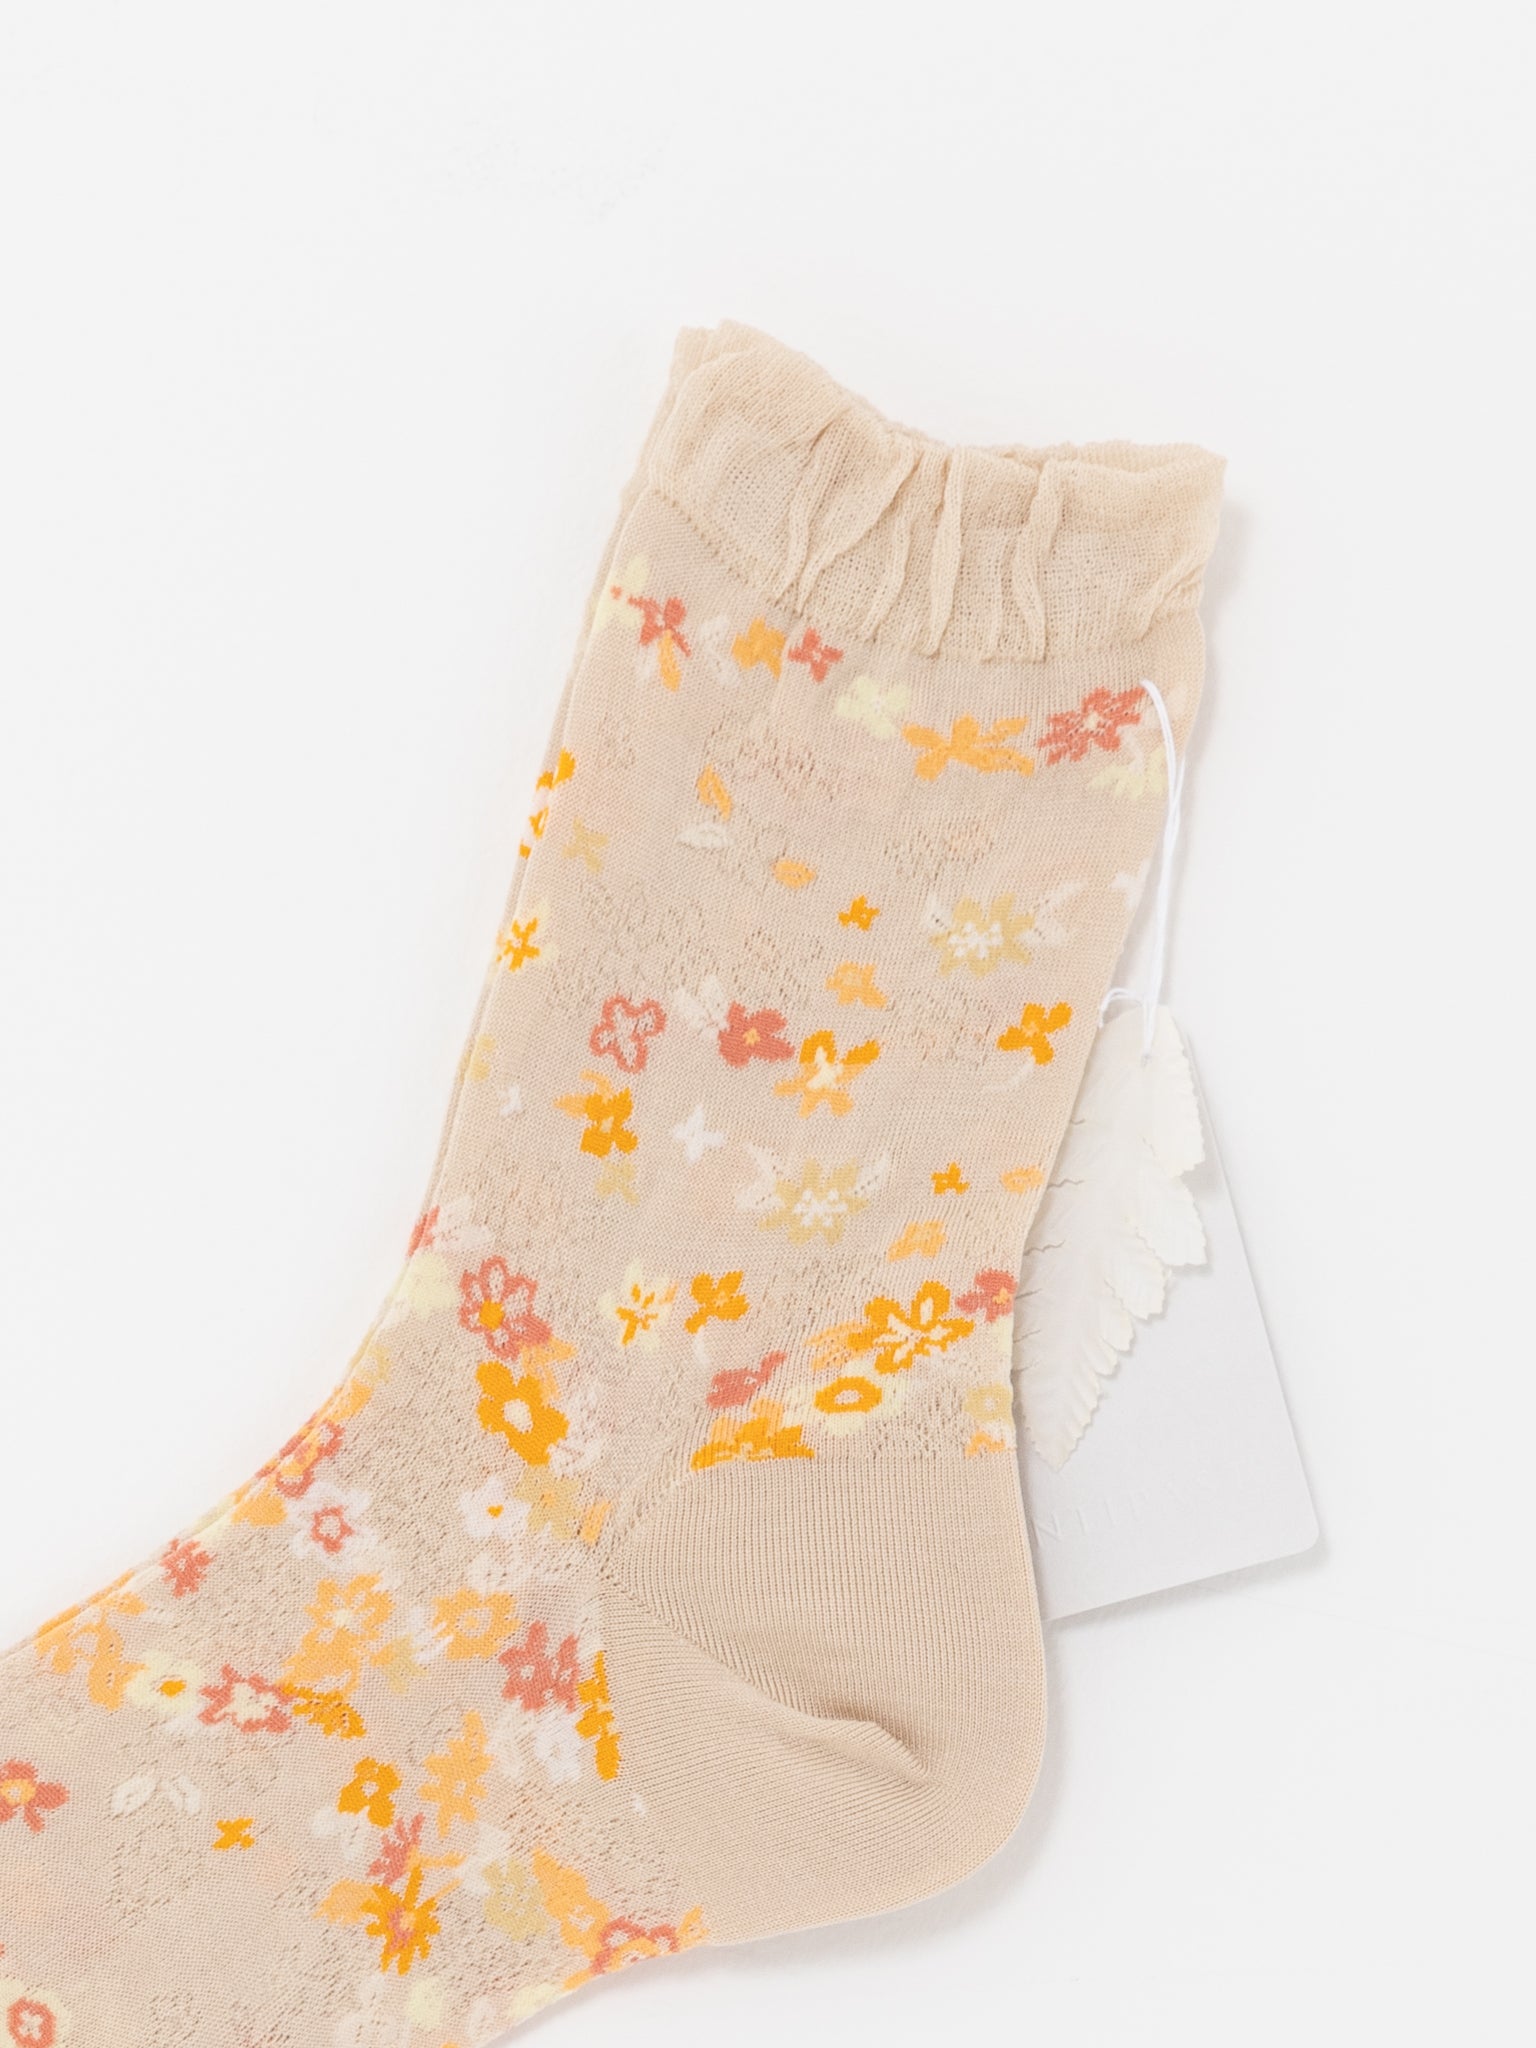 Antipast Peace Flower Socks, Beige - Worthwhile